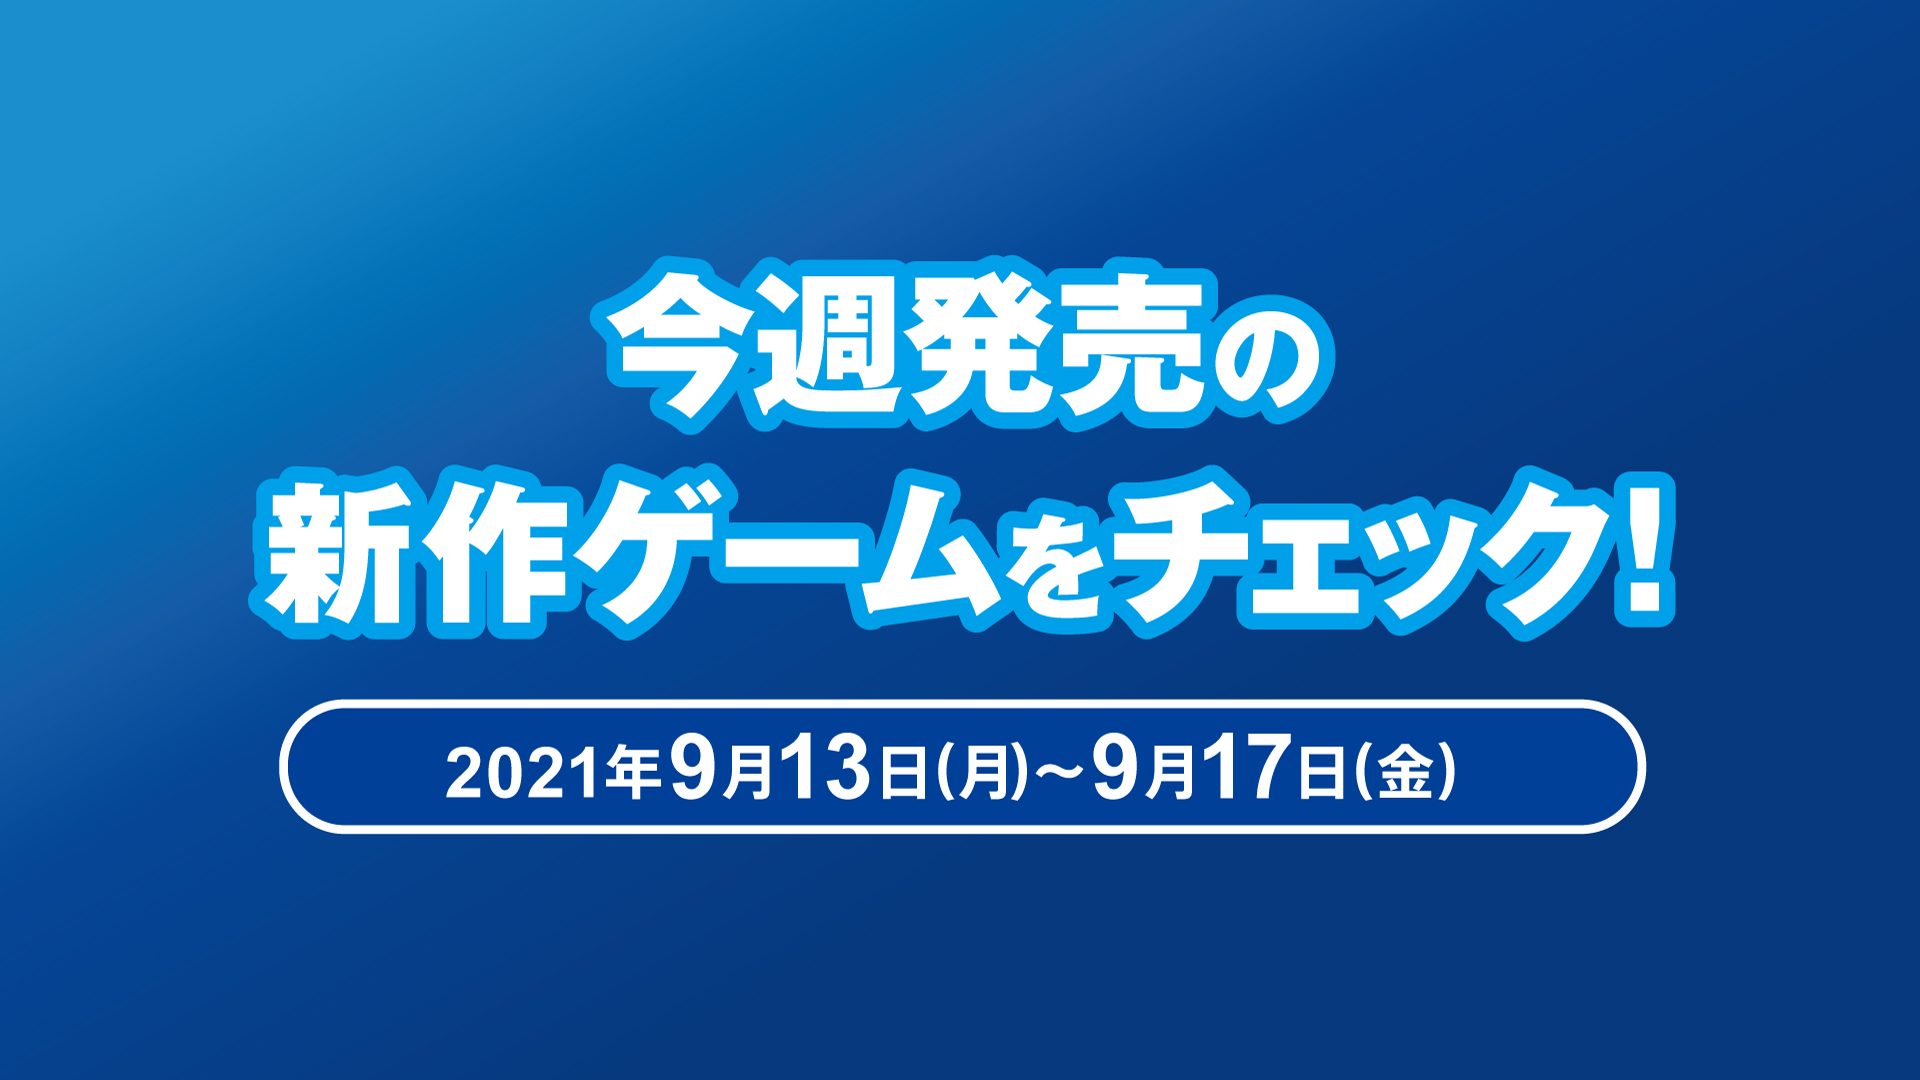 Deathloop 閃乱忍忍忍者大戦ネプテューヌ 少女達の響艶 など今週発売の新作ゲームをチェック Ps5 Ps4 9月13日 17日 Playstation Blog 日本語